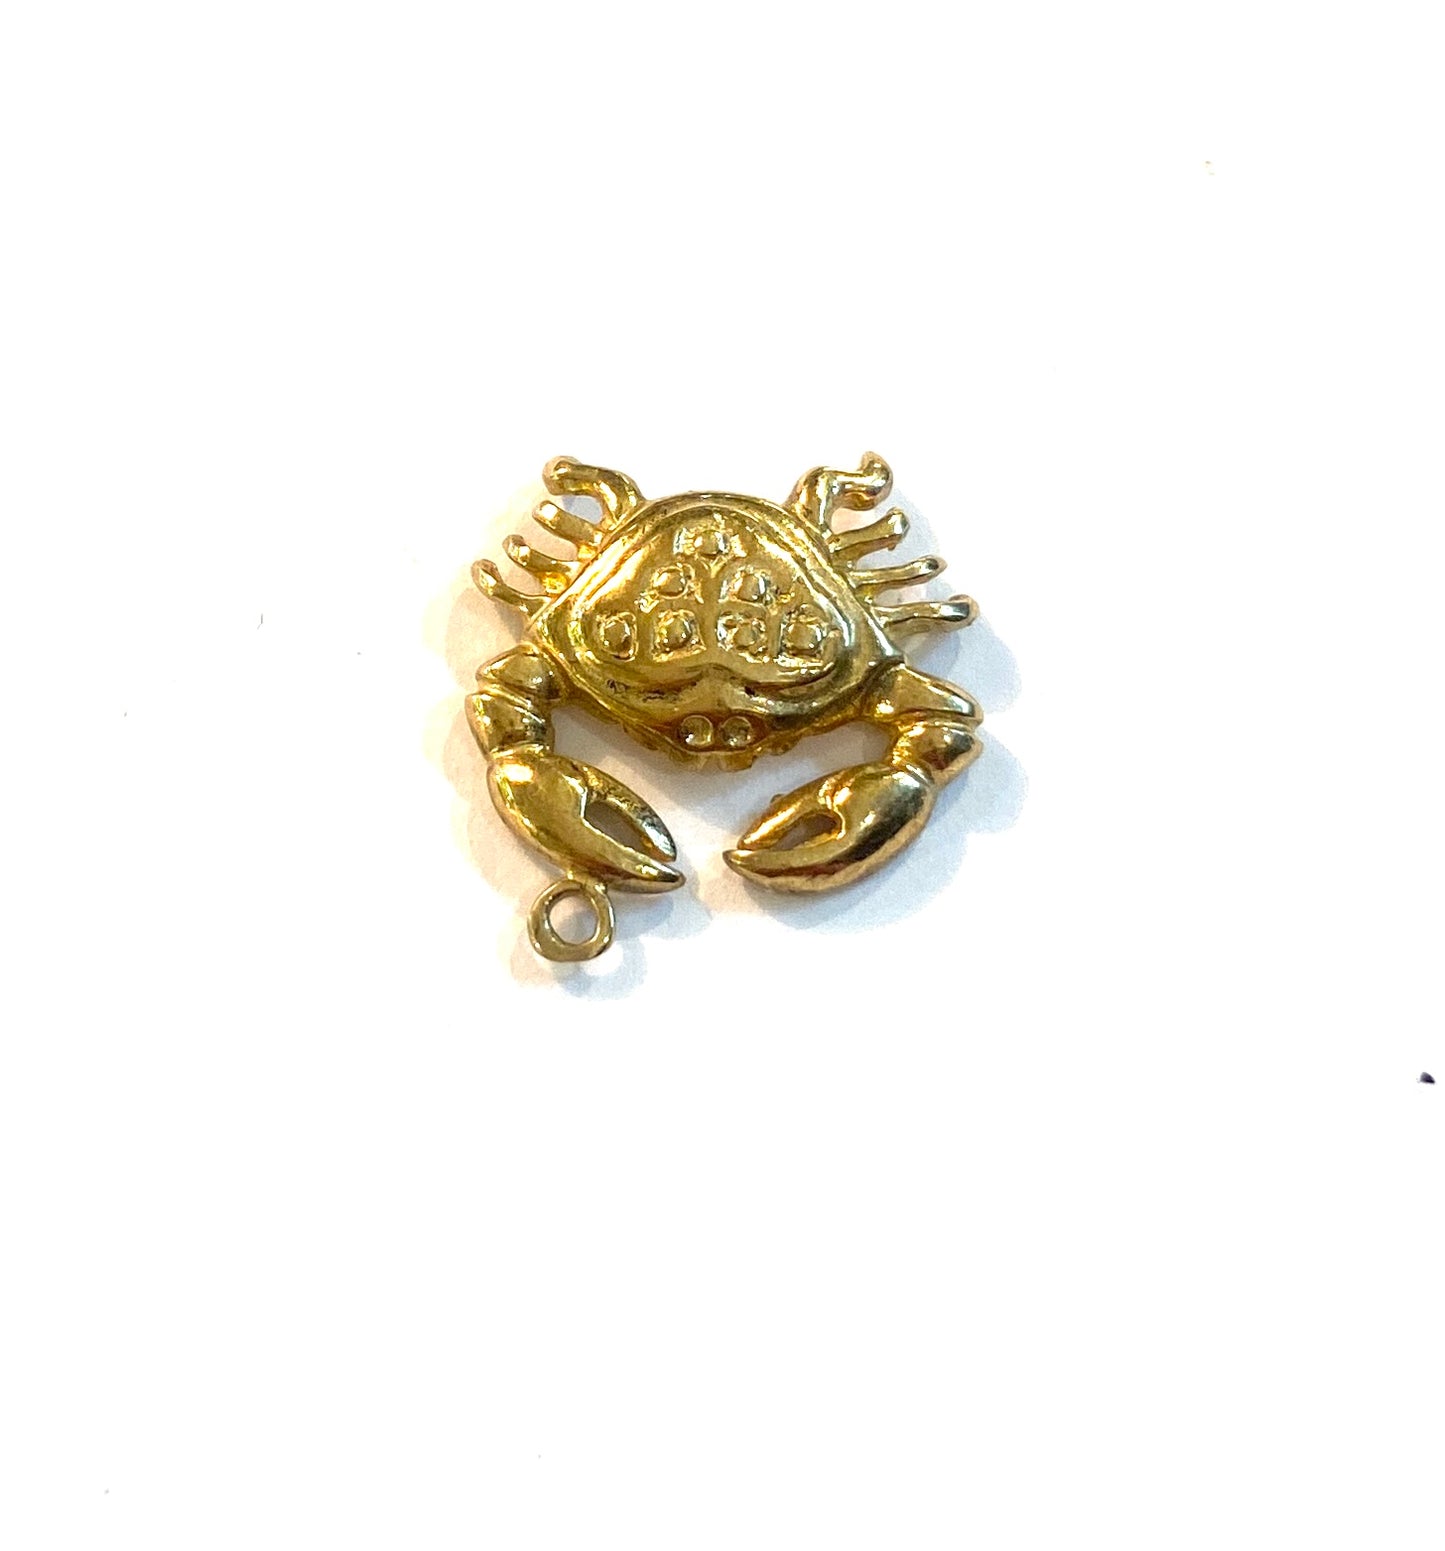 9ct 375 vintage gold crab / cancer charm